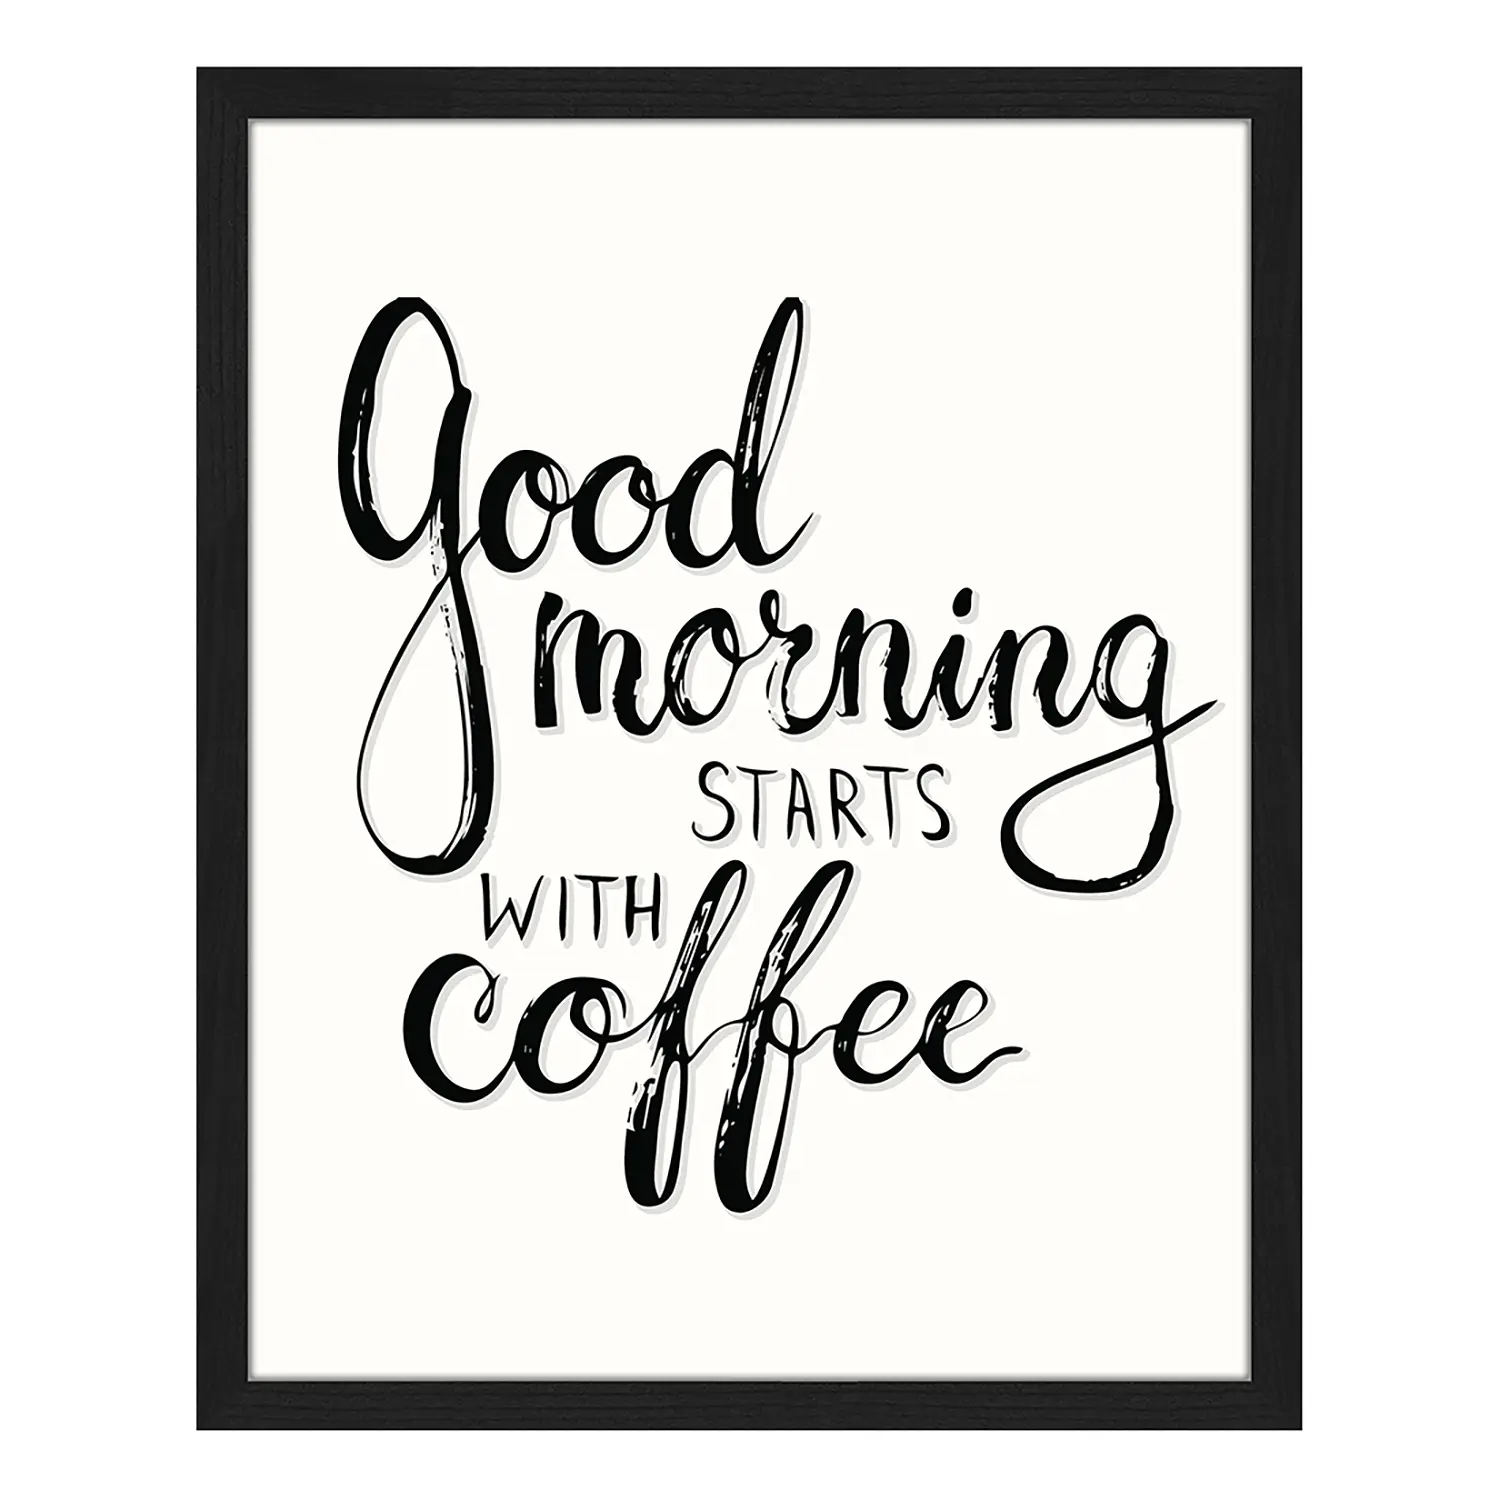 morning coffee Good starts with Bild